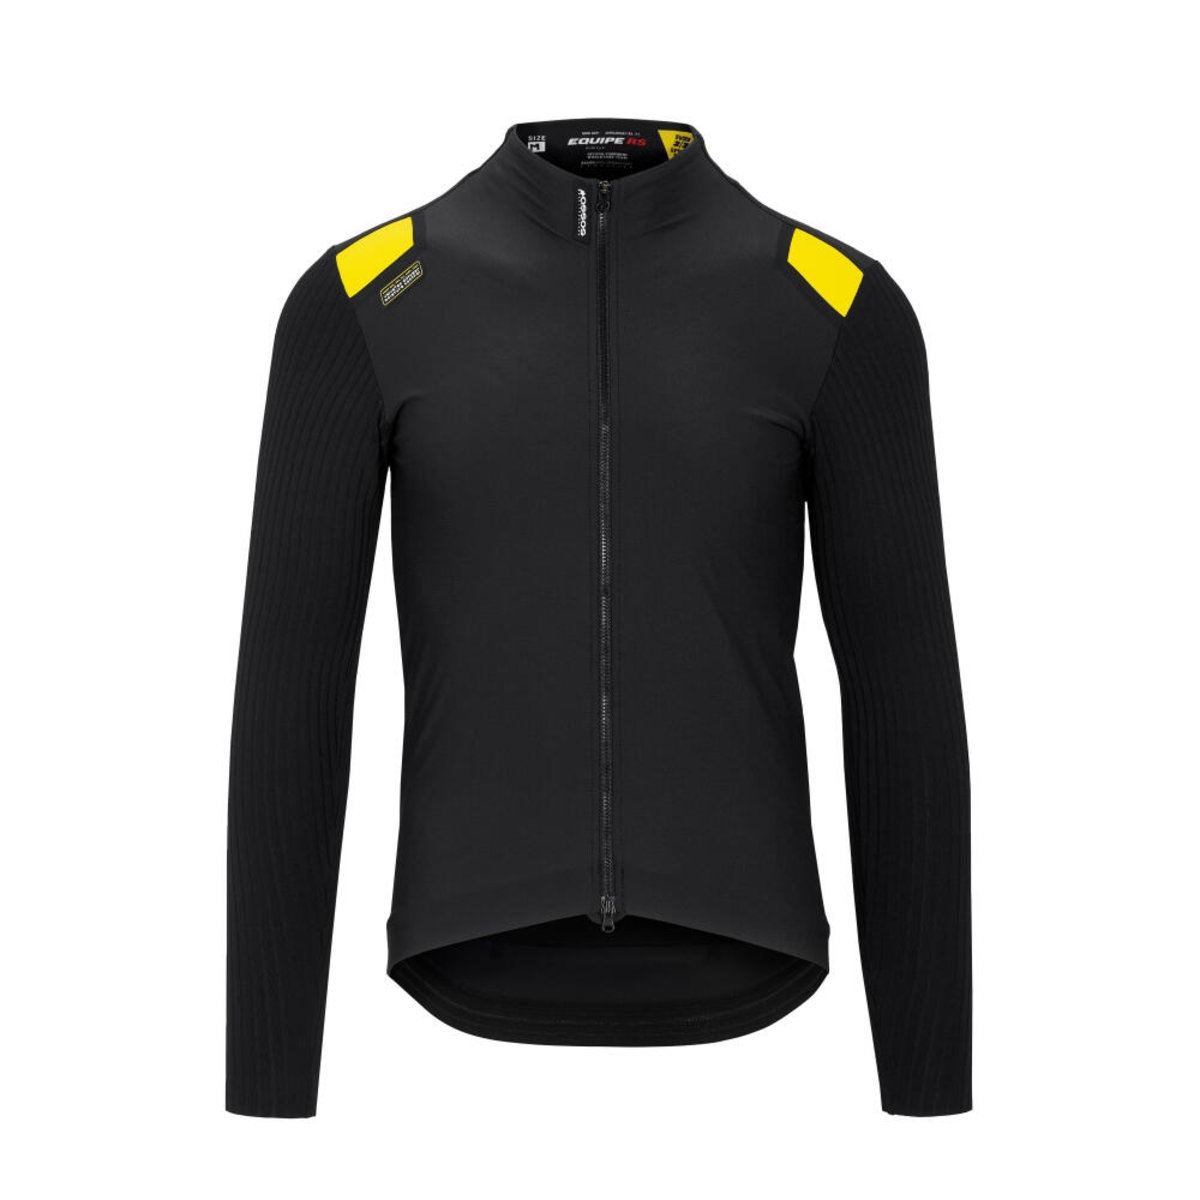 Куртка ASSOS Equipe RS Spring Fall Jacket, довг. рукав, чоловіча, чорна з жовтим, M фото 